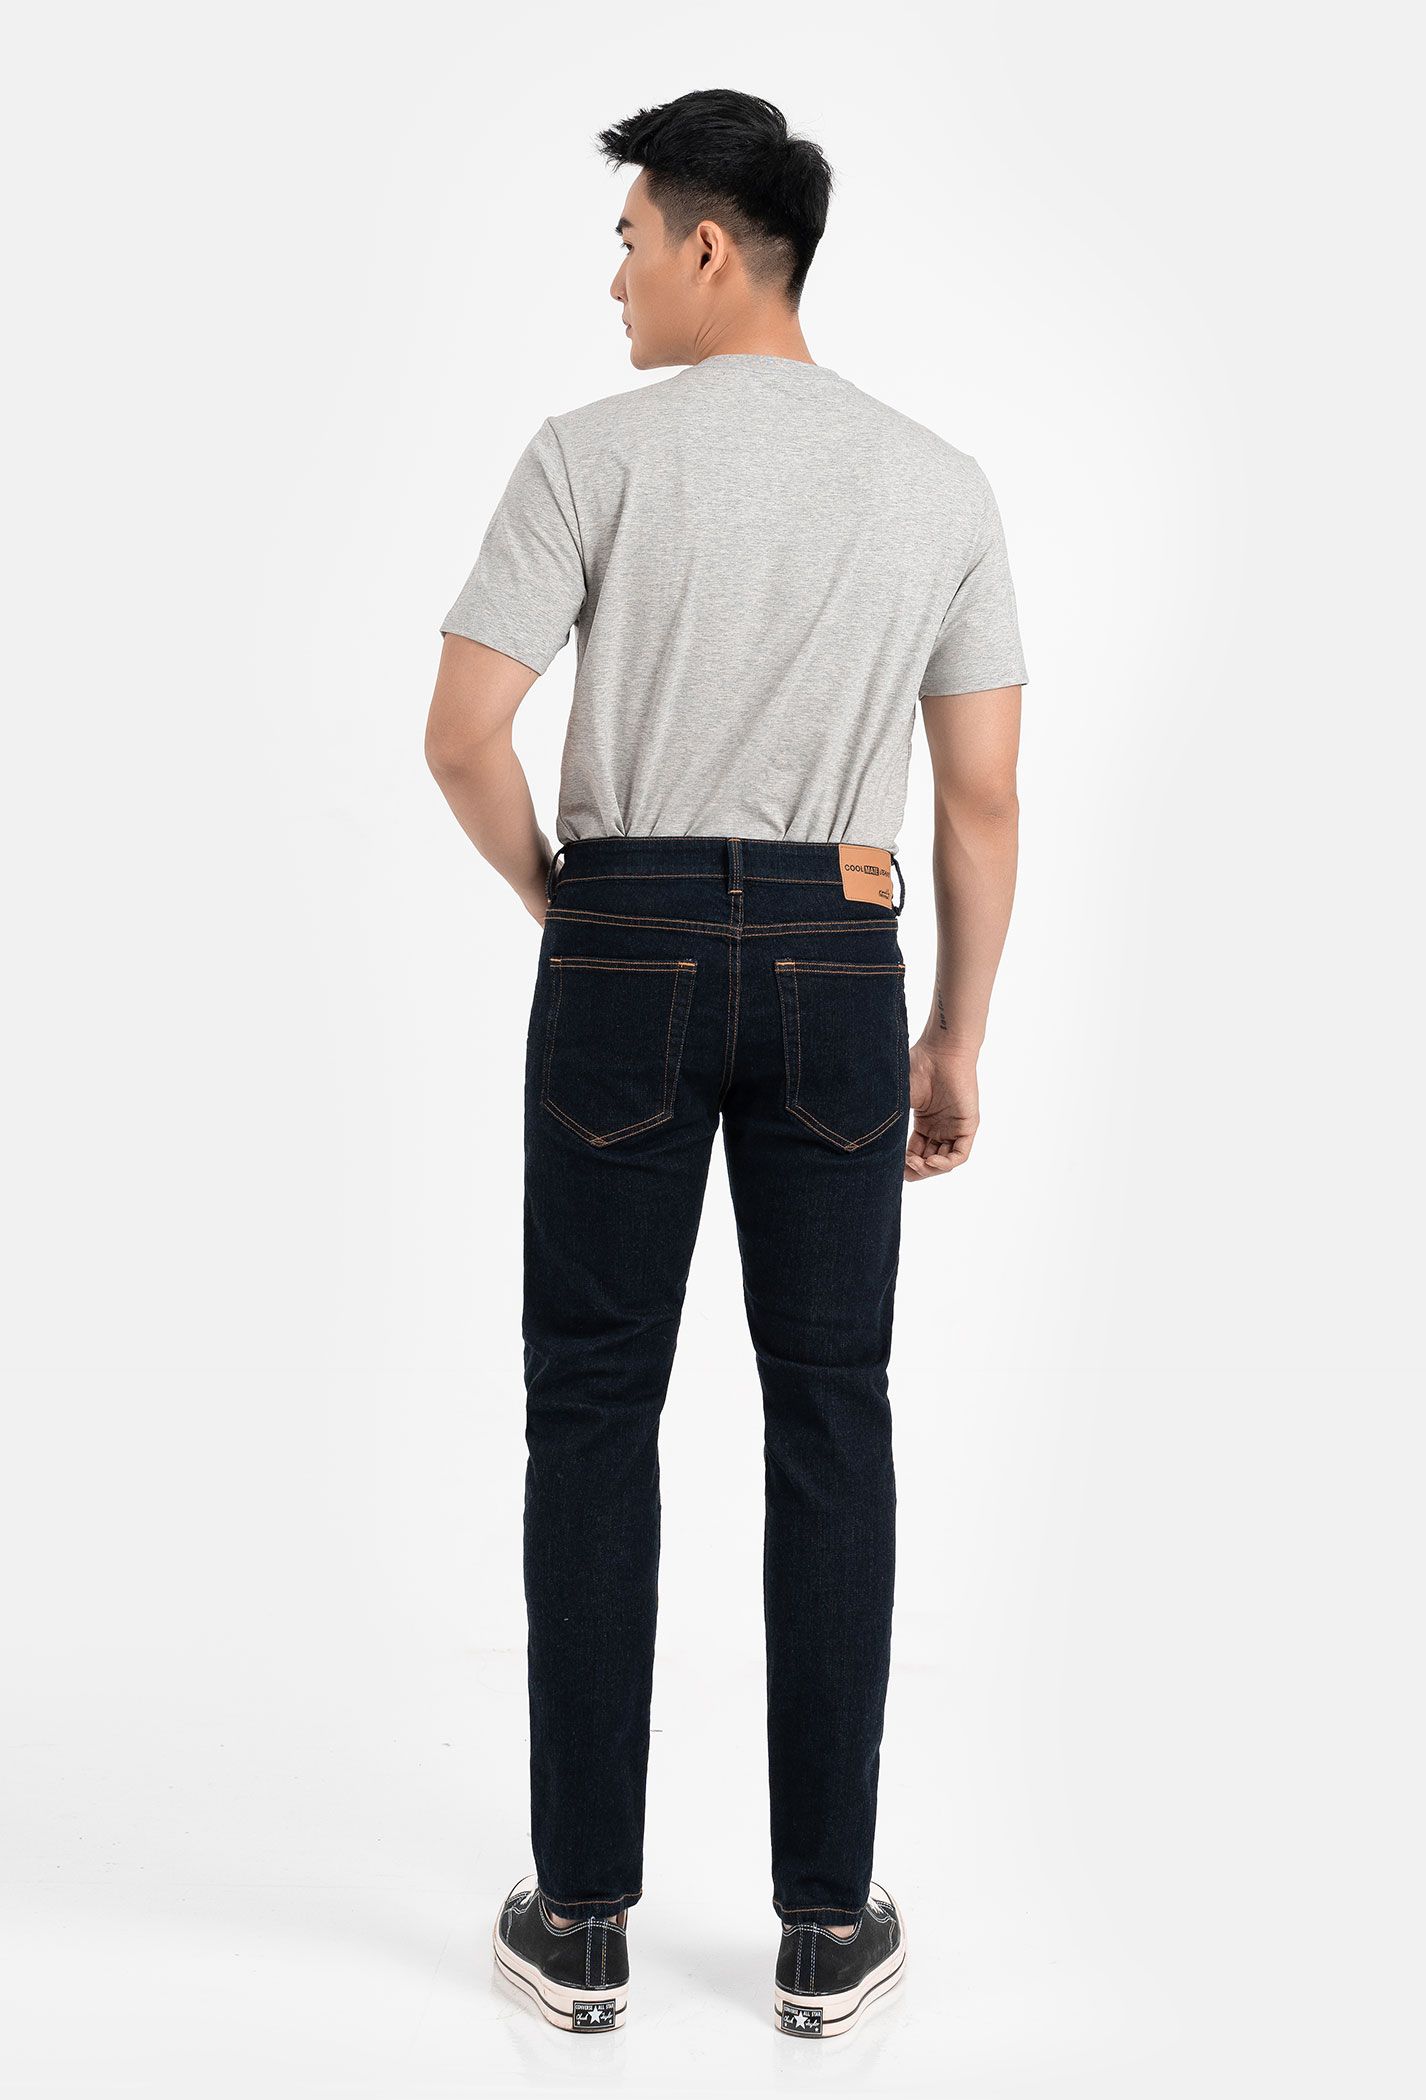 Quần Jeans Basic Slim V2 Xanh garment 2